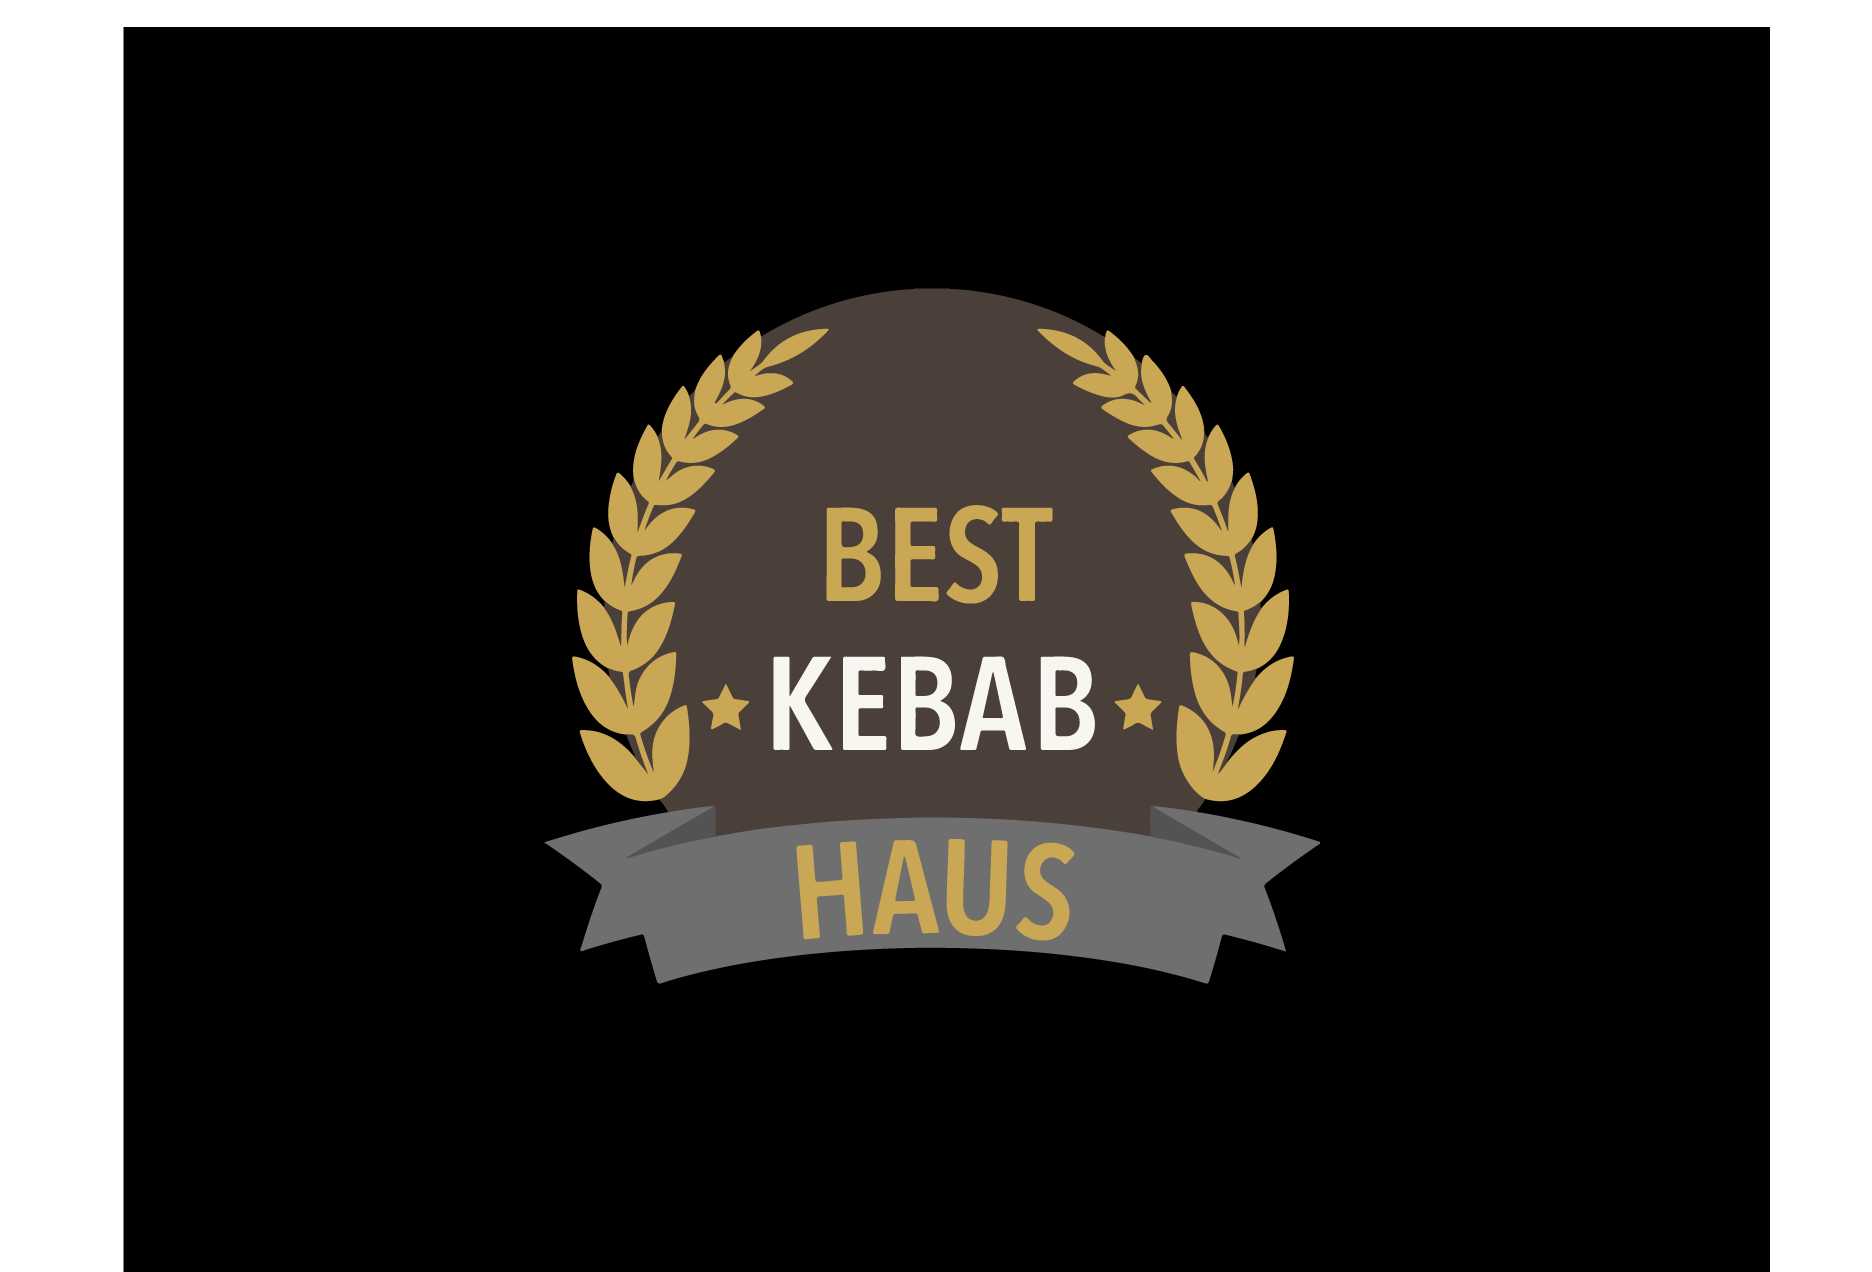 Best Kebab Haus - Aachen